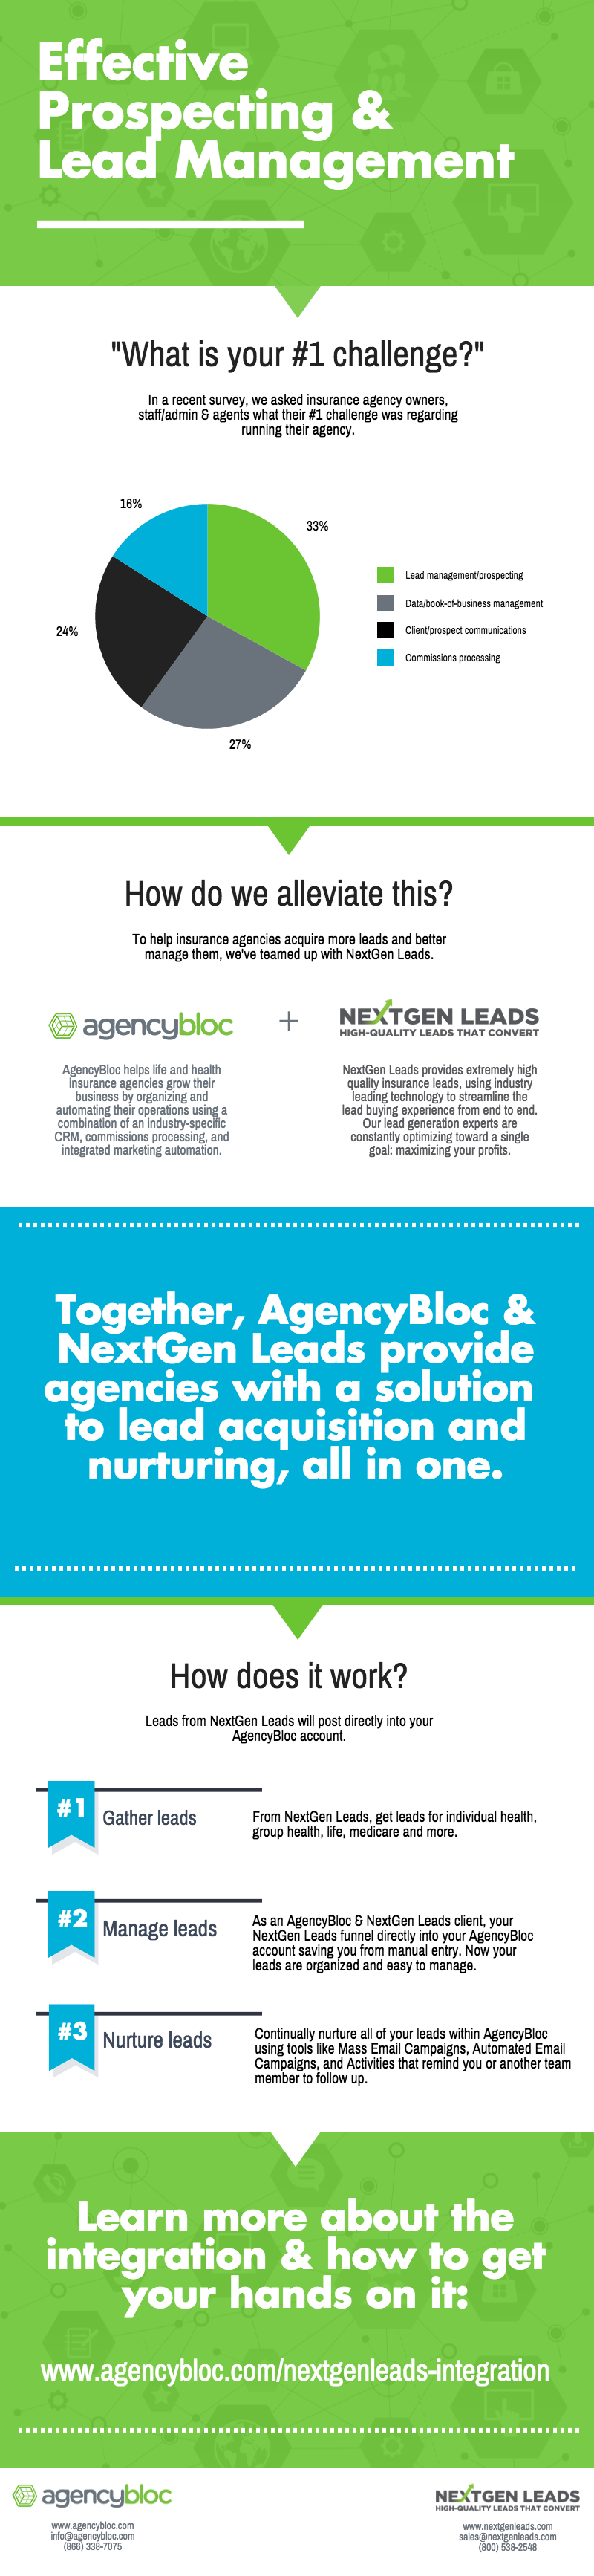 AgencyBloc and NextGen Leads